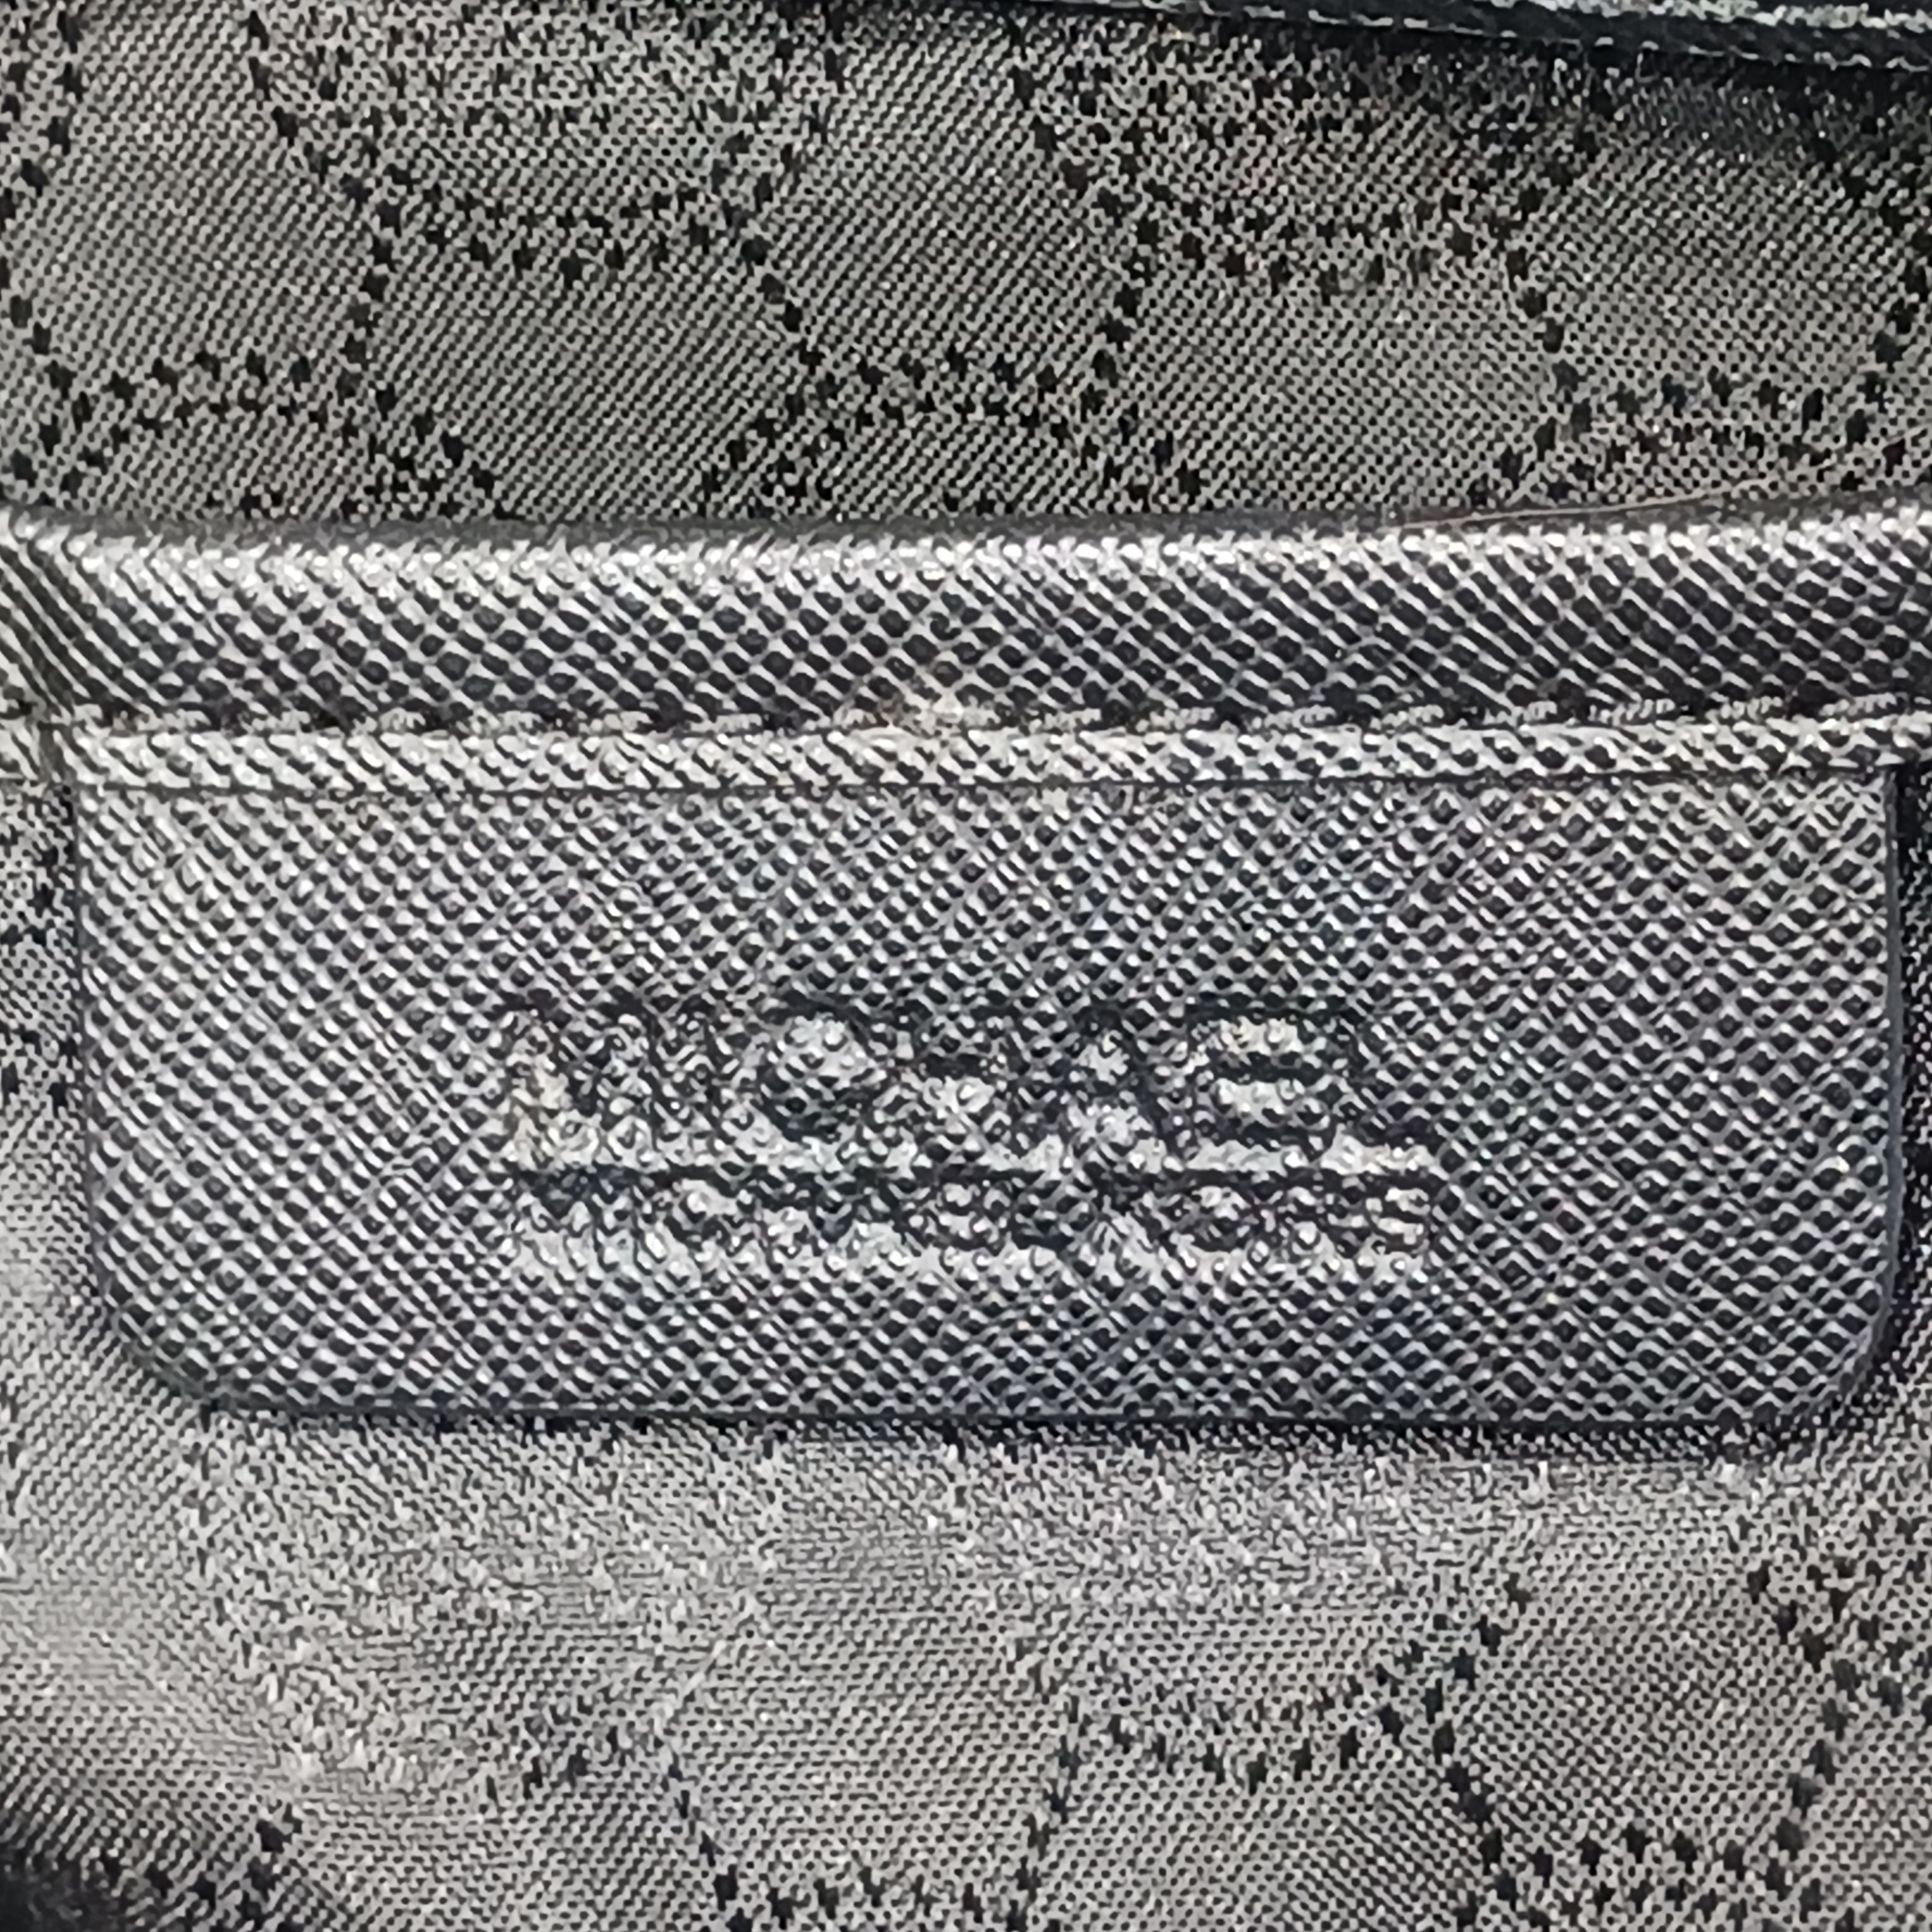 Michael Kors Black Leather Handbags & Purses for Women for sale | eBay